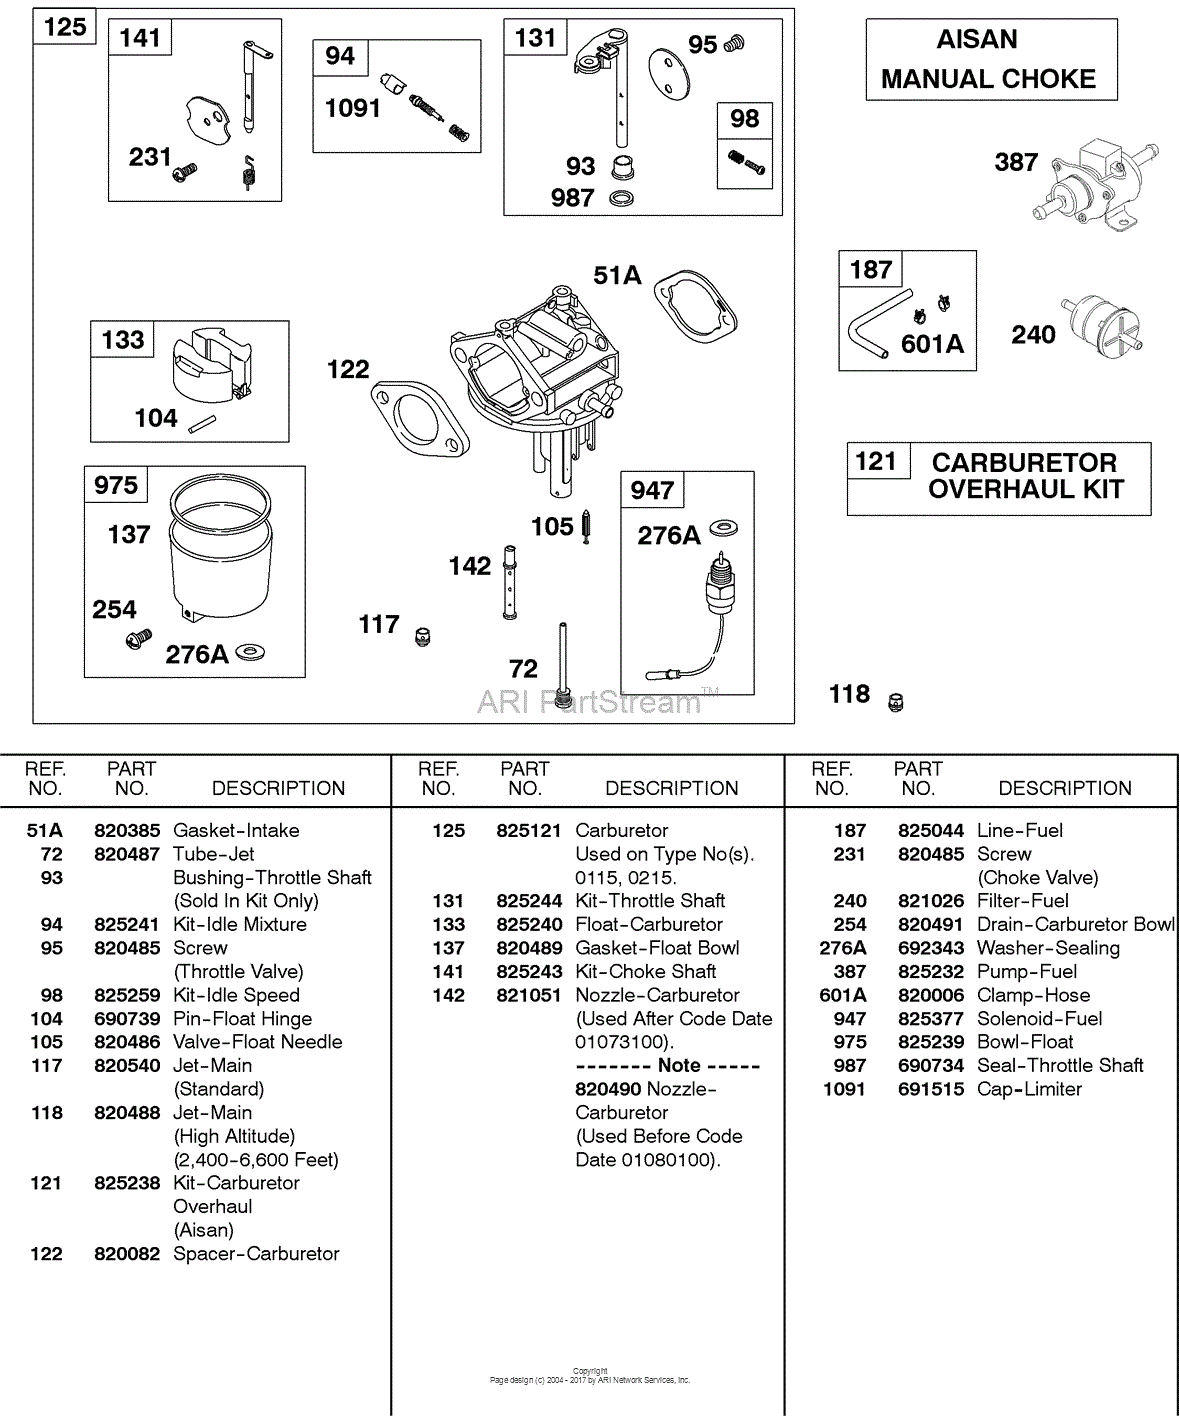 carburetor troubleshooting guide